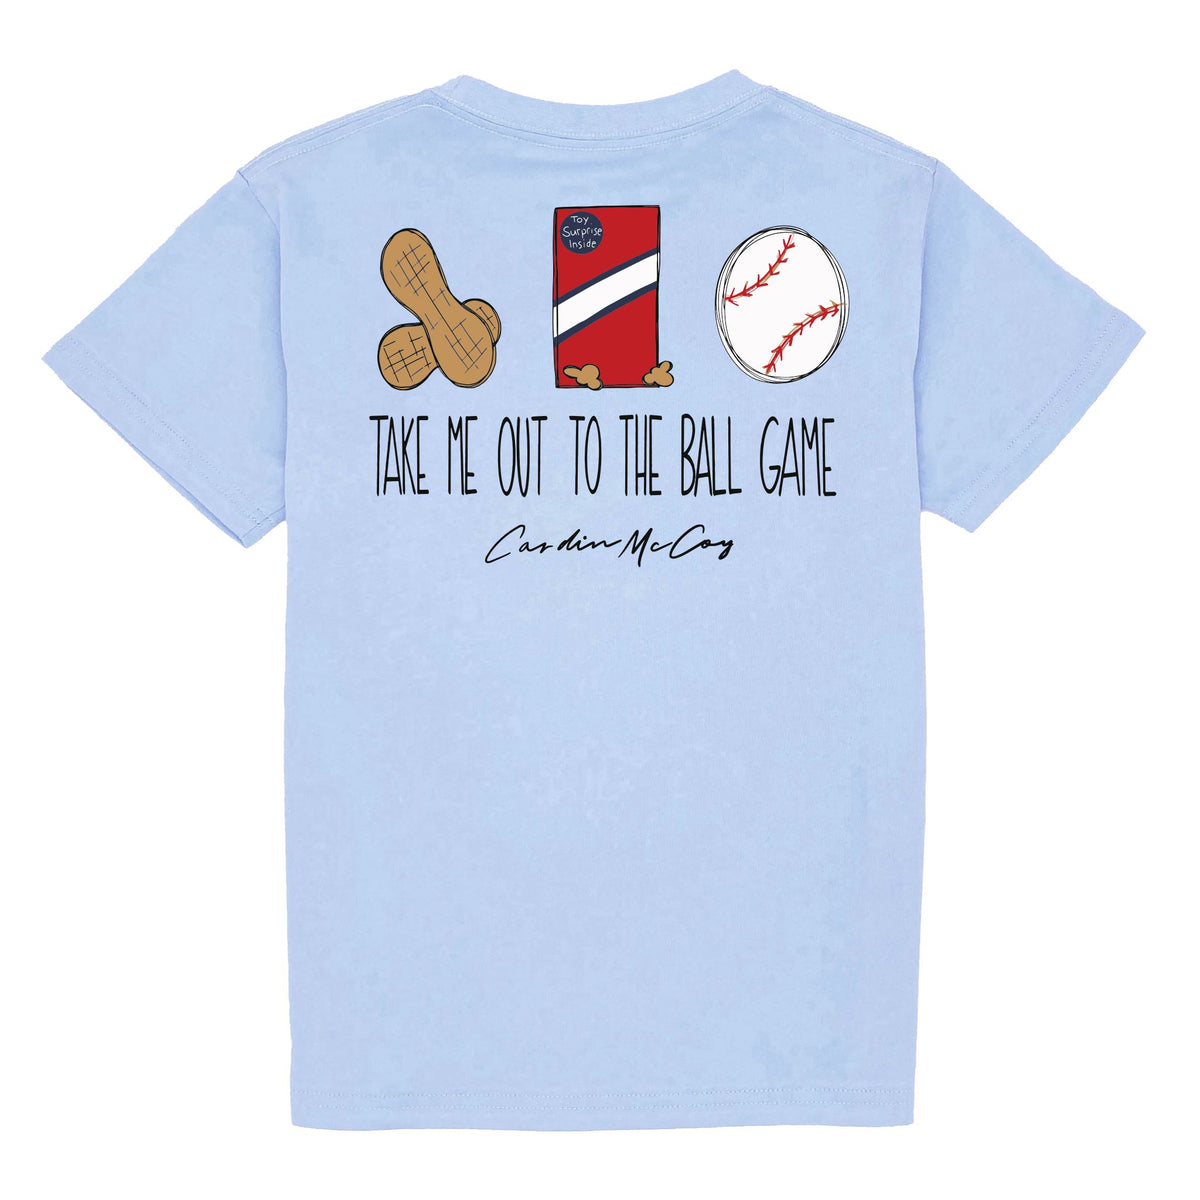 Kids' Take Me Out to the Ball Game Short Sleeve Pocket Tee Short Sleeve T-Shirt Cardin McCoy Light Blue XXS (2/3) 